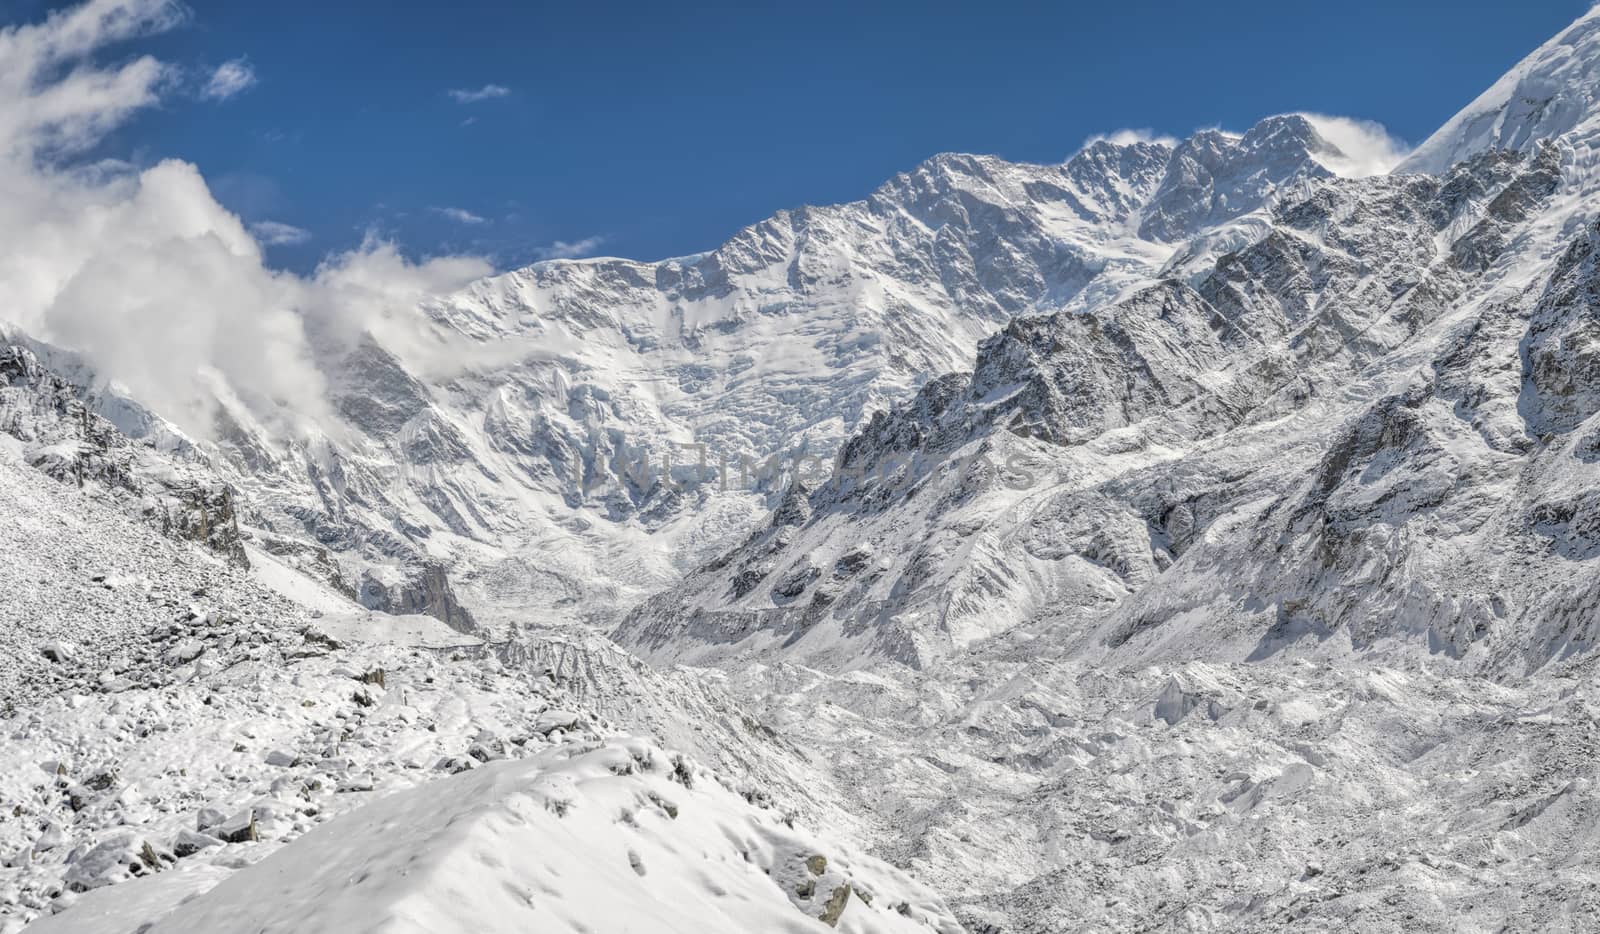 Scenic panorama of Himalayas near Kanchenjunga in Nepal